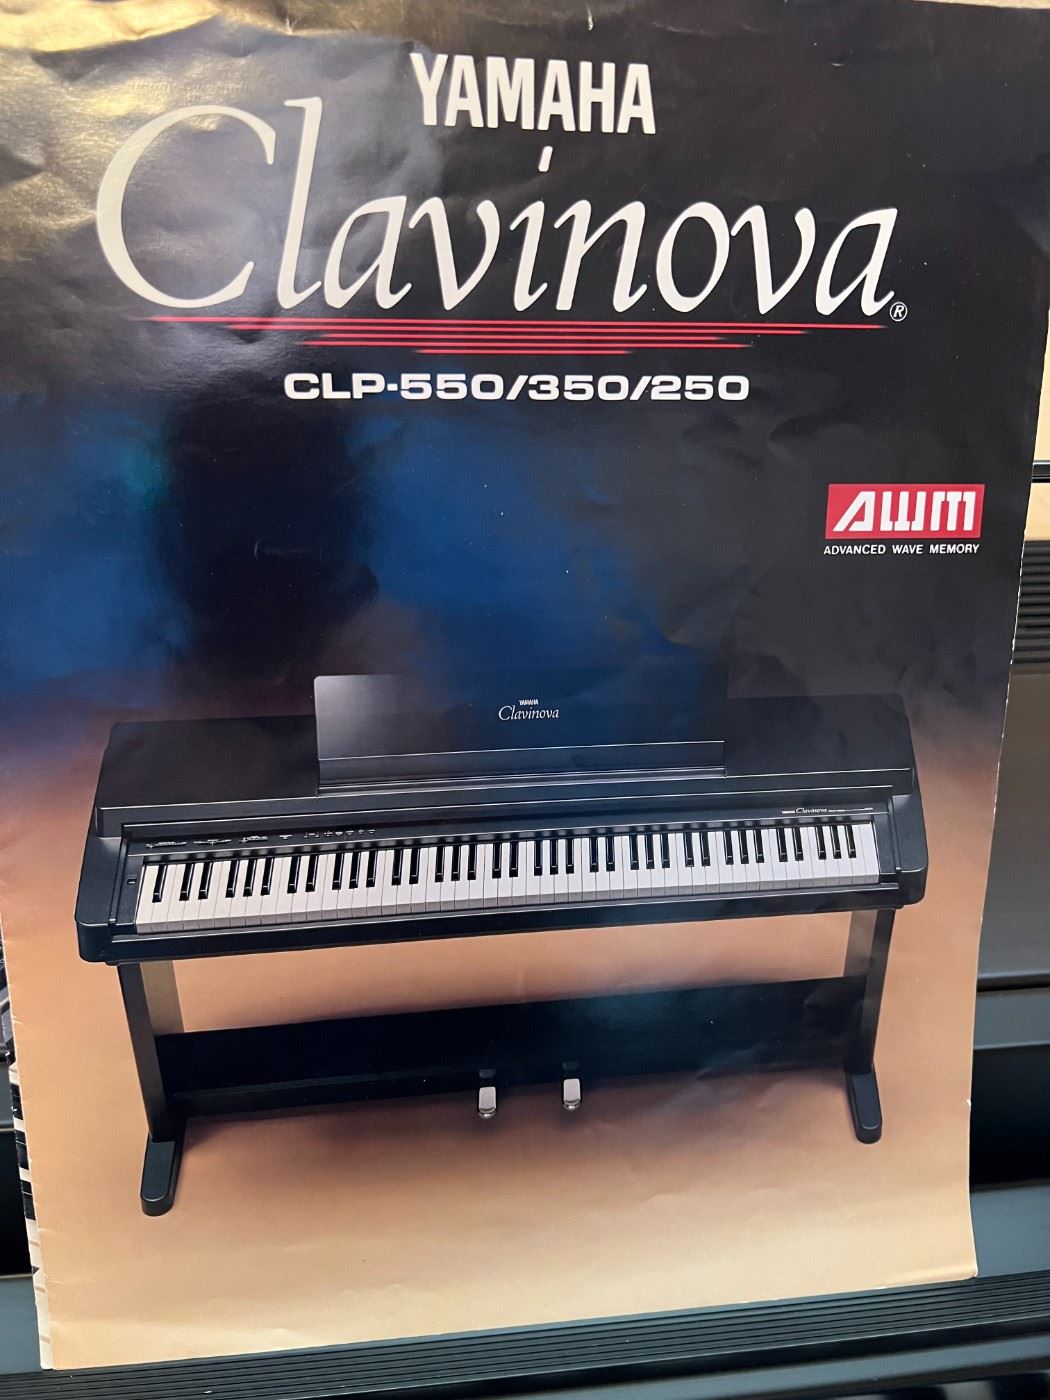 This Clavinova is Super Nice